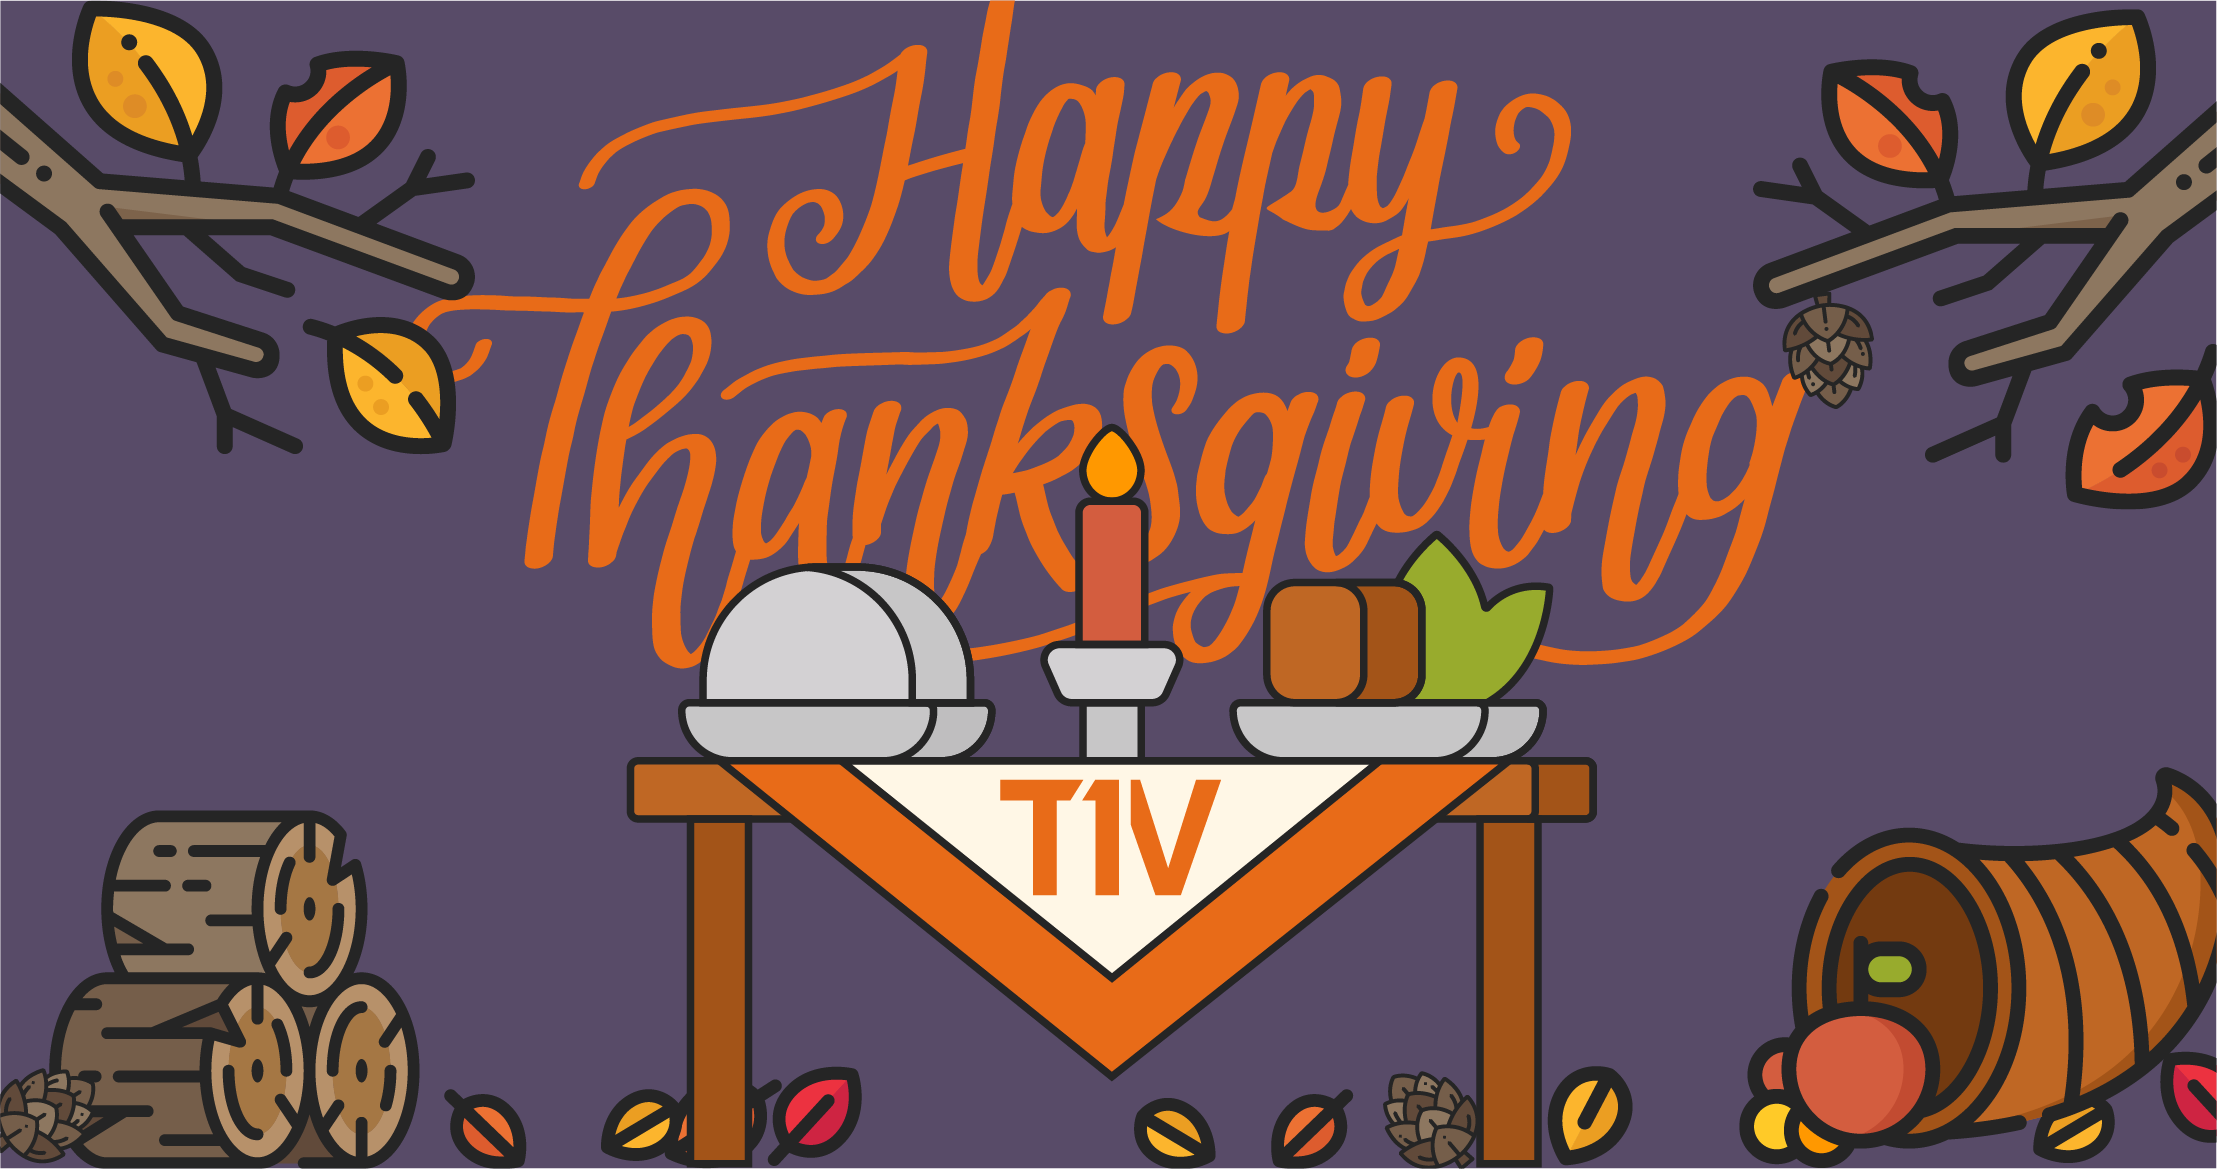 T1V-Happy-Thanksgiving-2020-collaboration-ThinkHub-BYOD-graphic-final